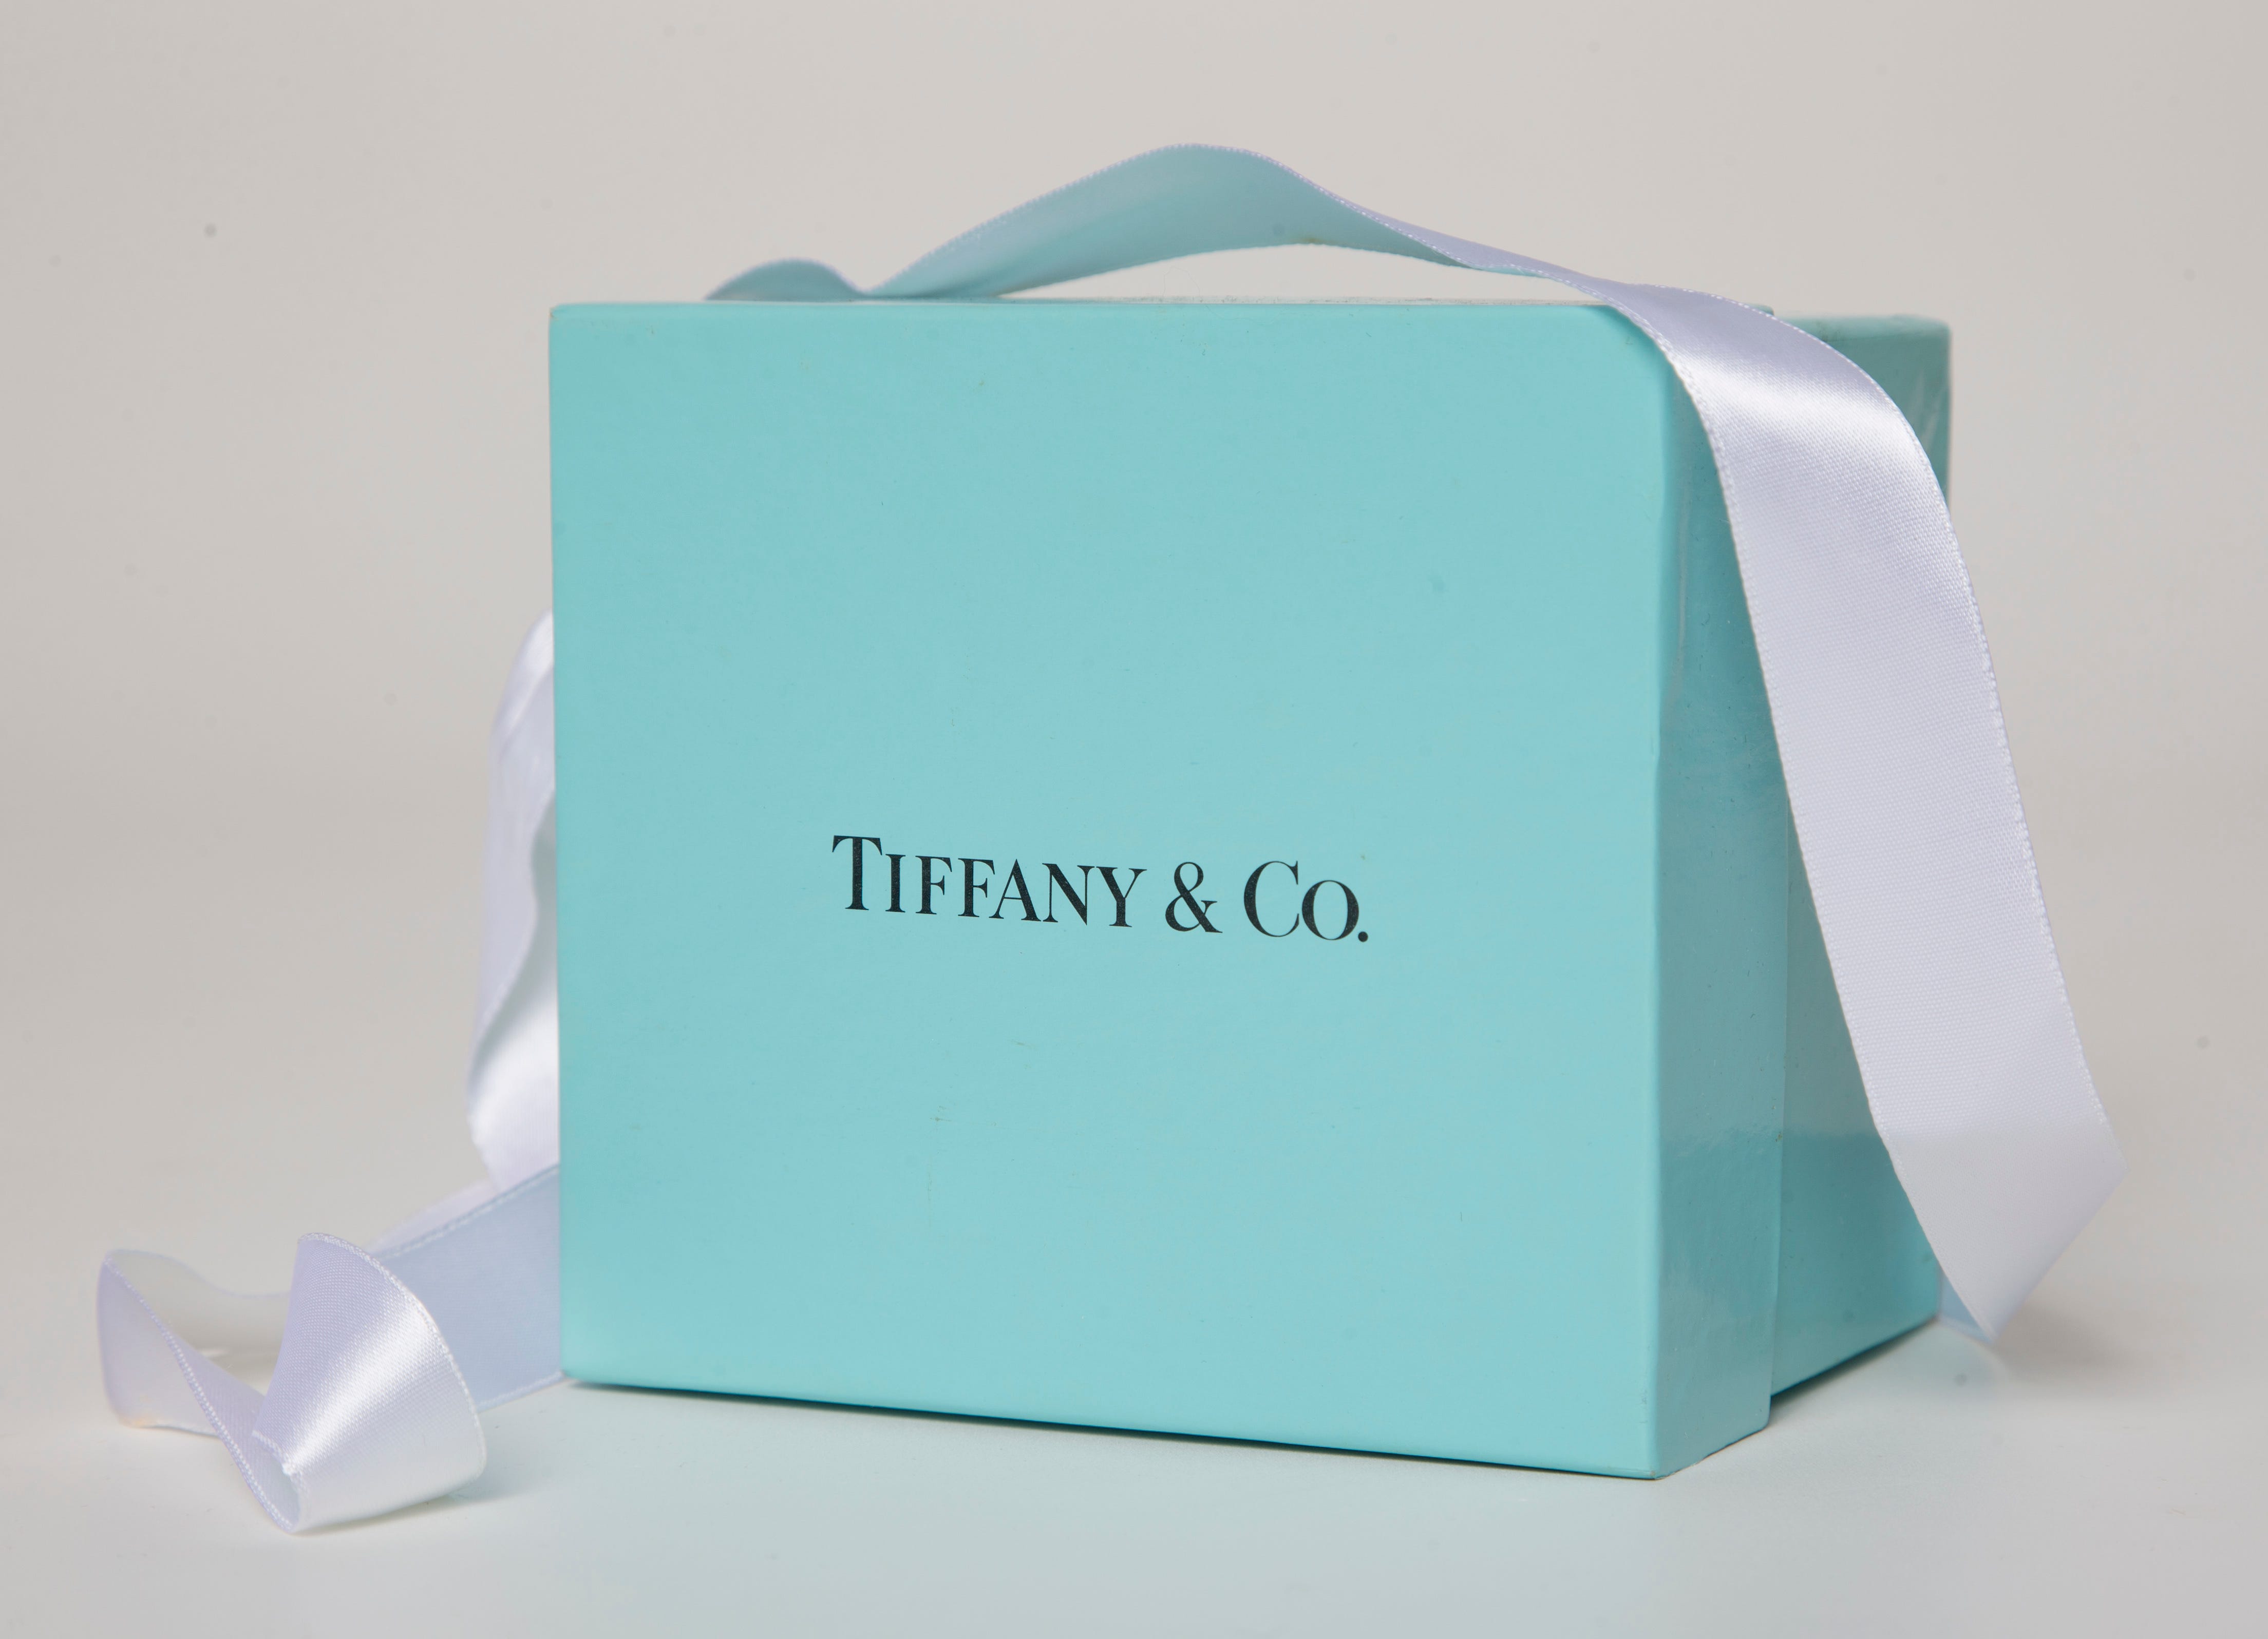 Tiffany \u0026 Co. takeover bid